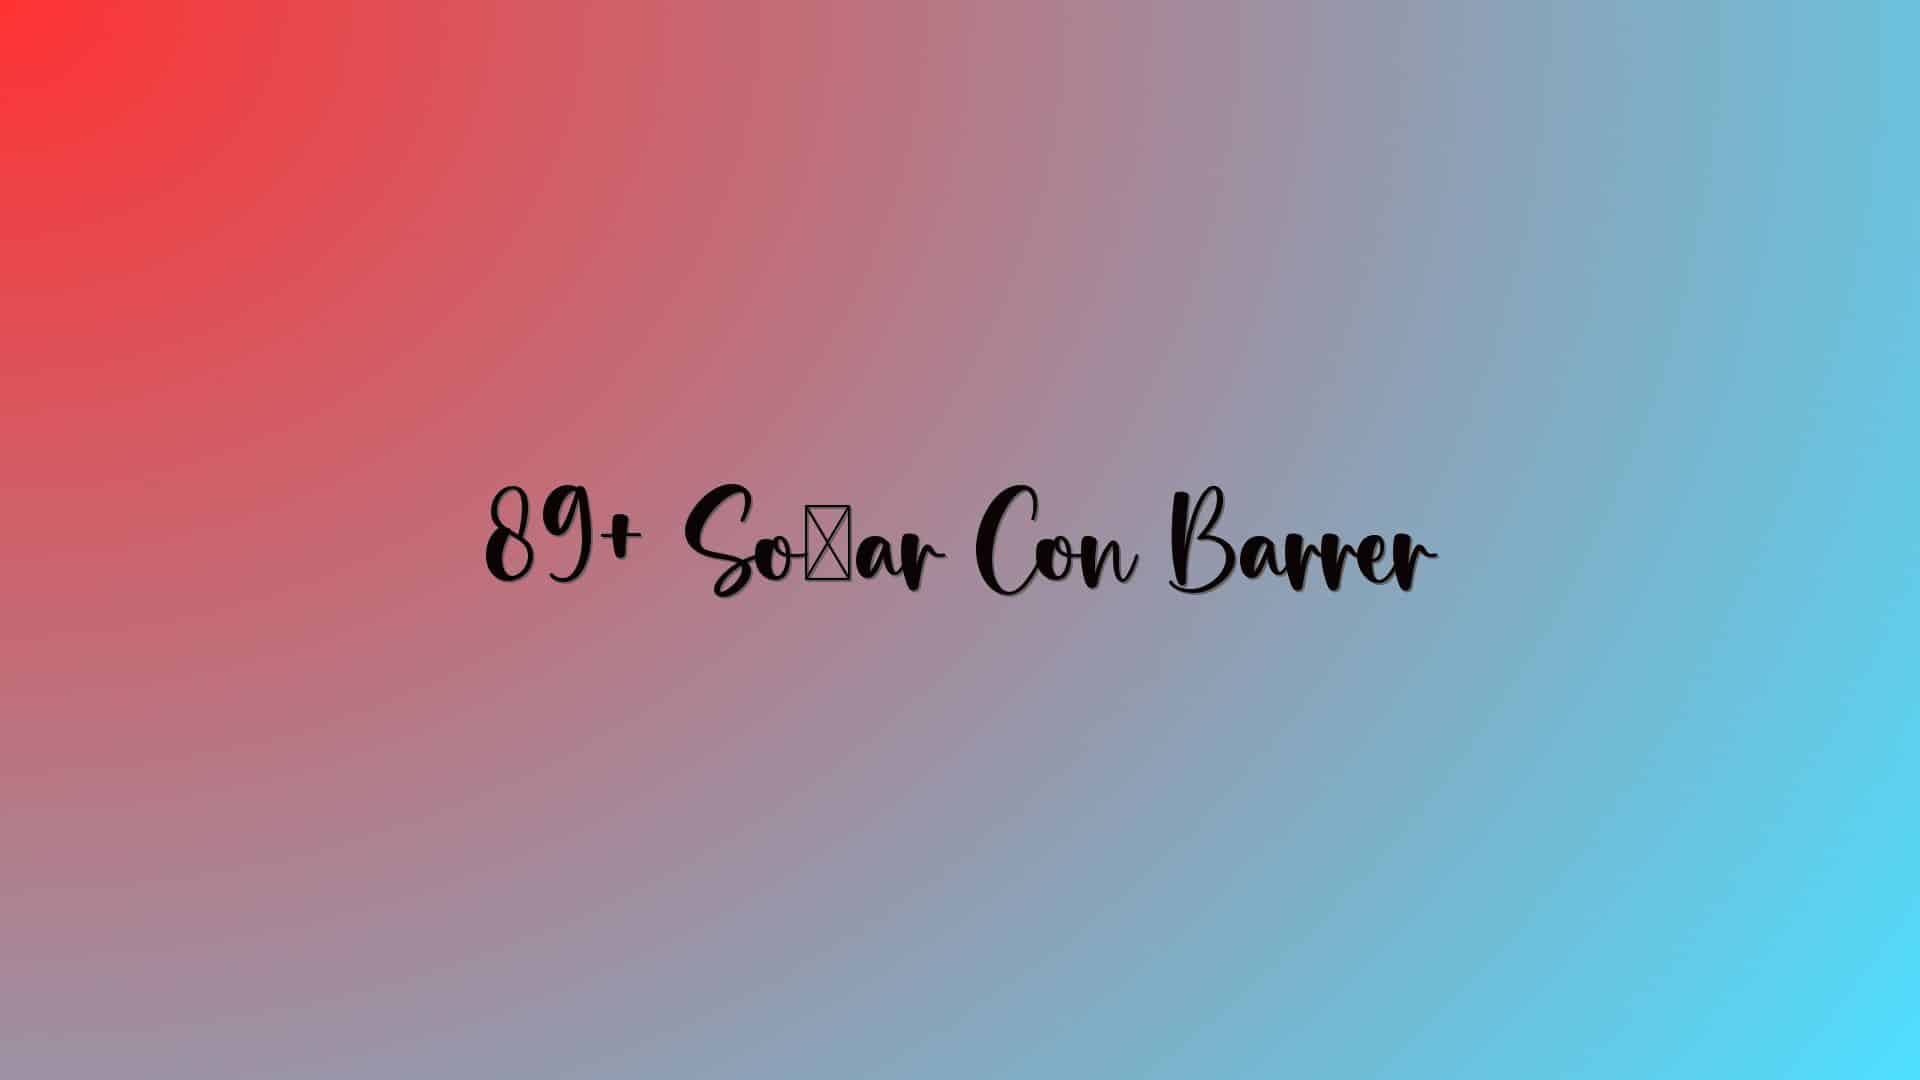 89+ Soñar Con Barrer